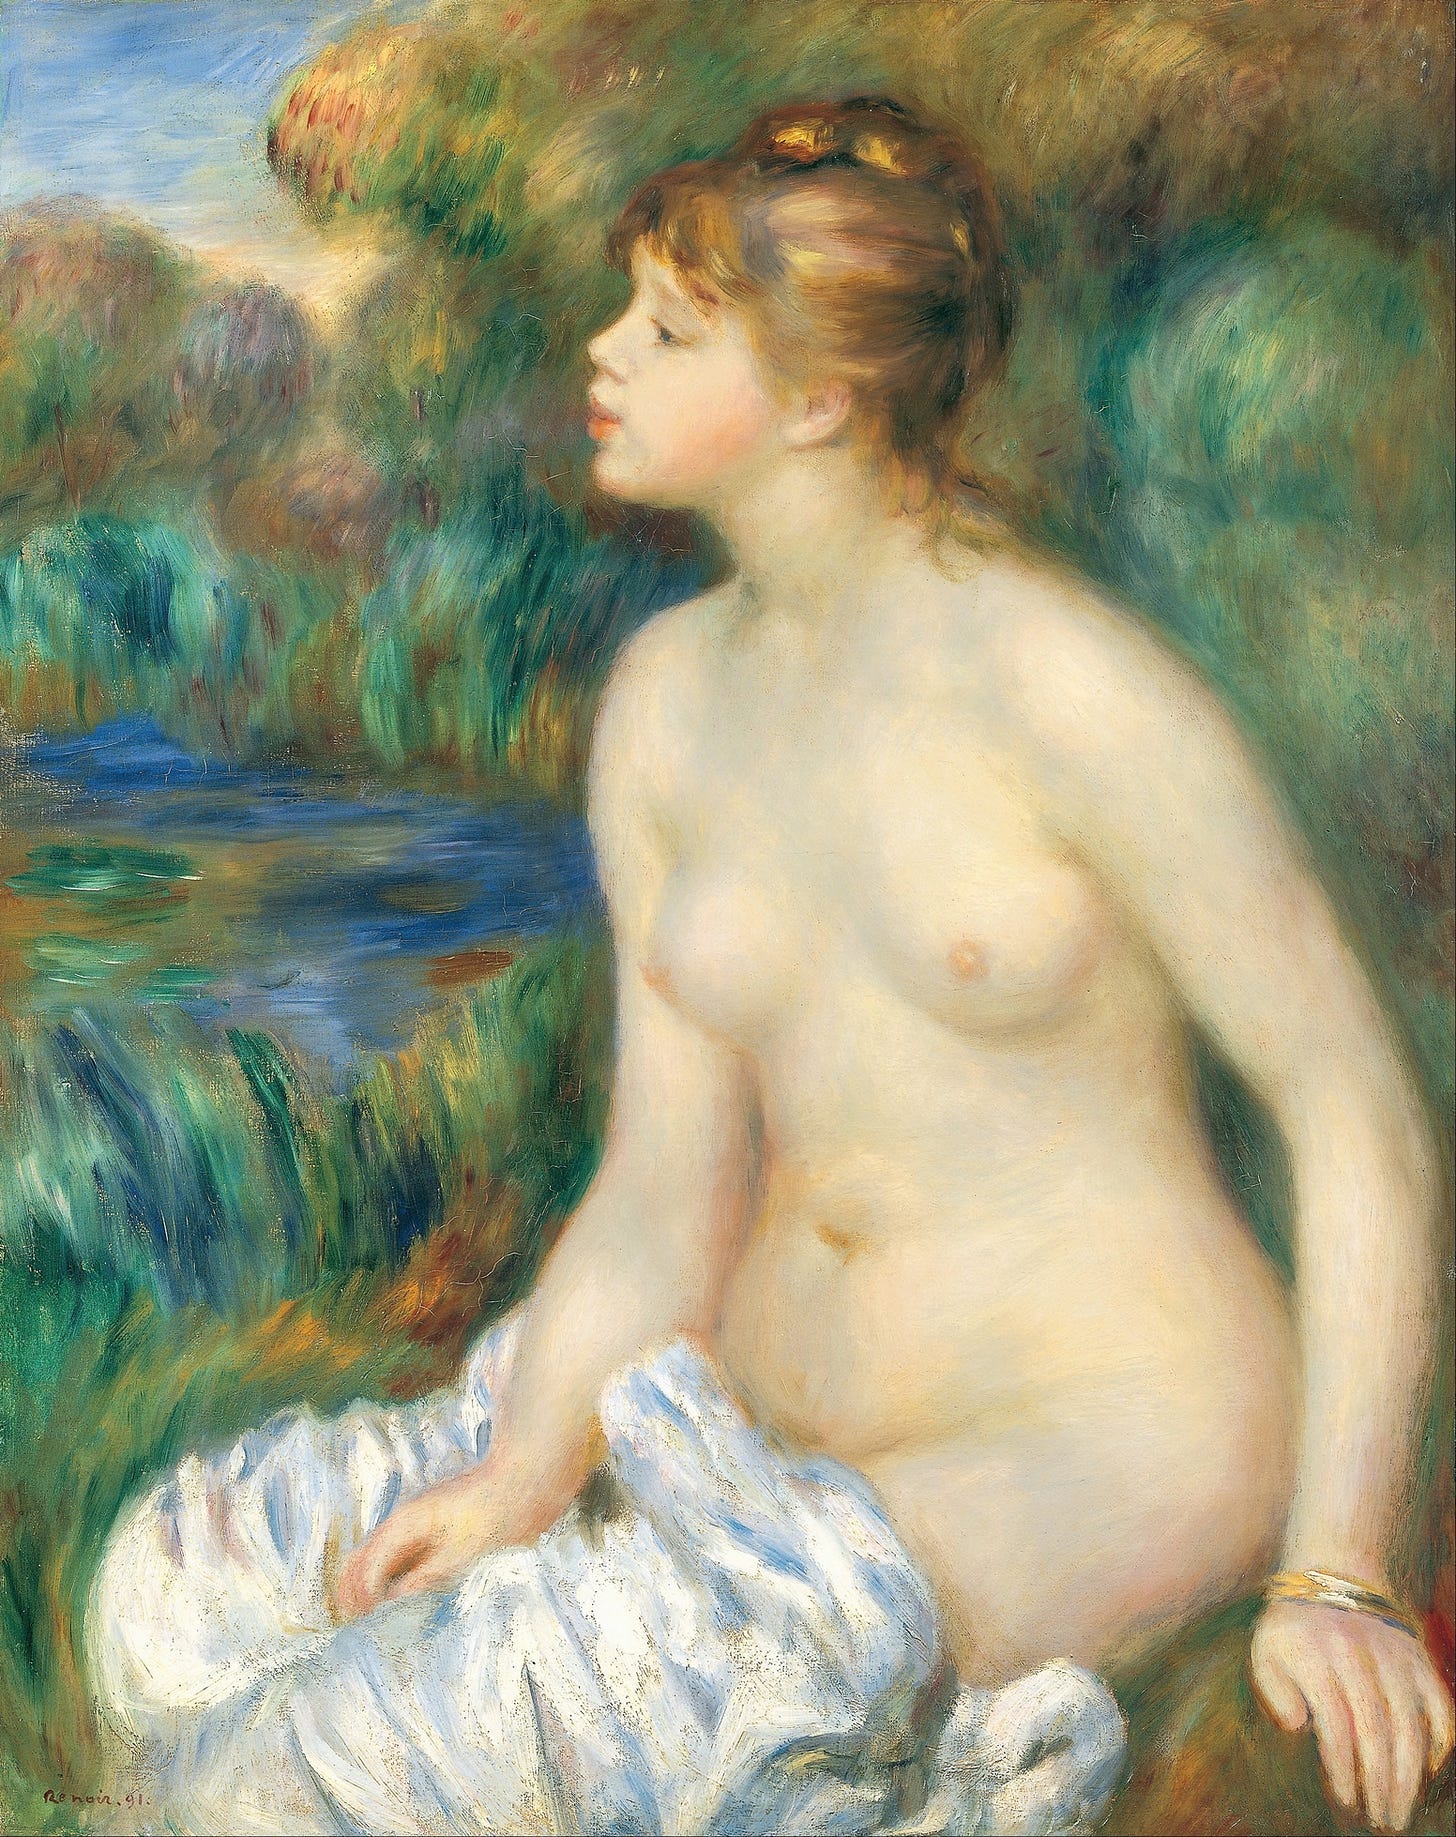 Bather (1891) by Pierre-Auguste Renoir